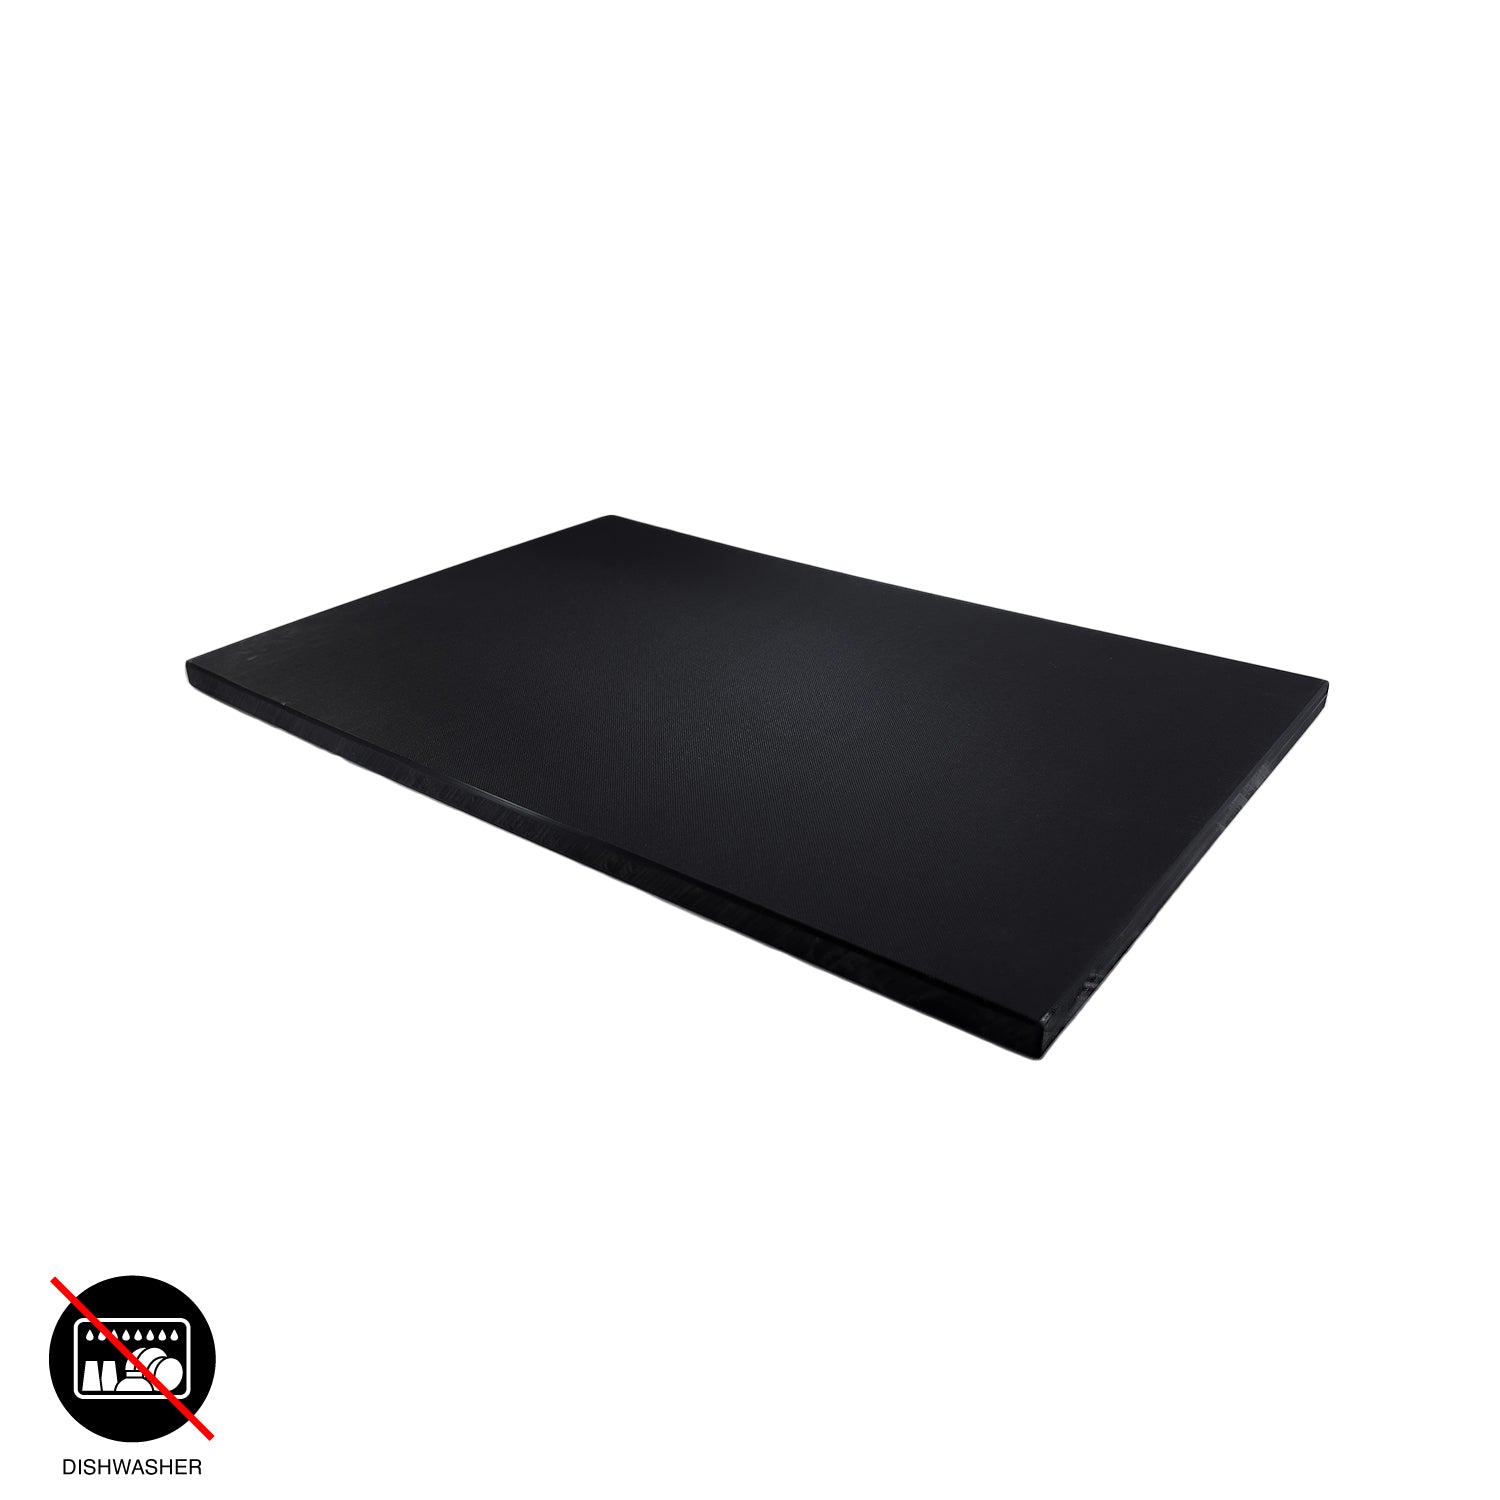 Black plastic cutting board 30x20cm